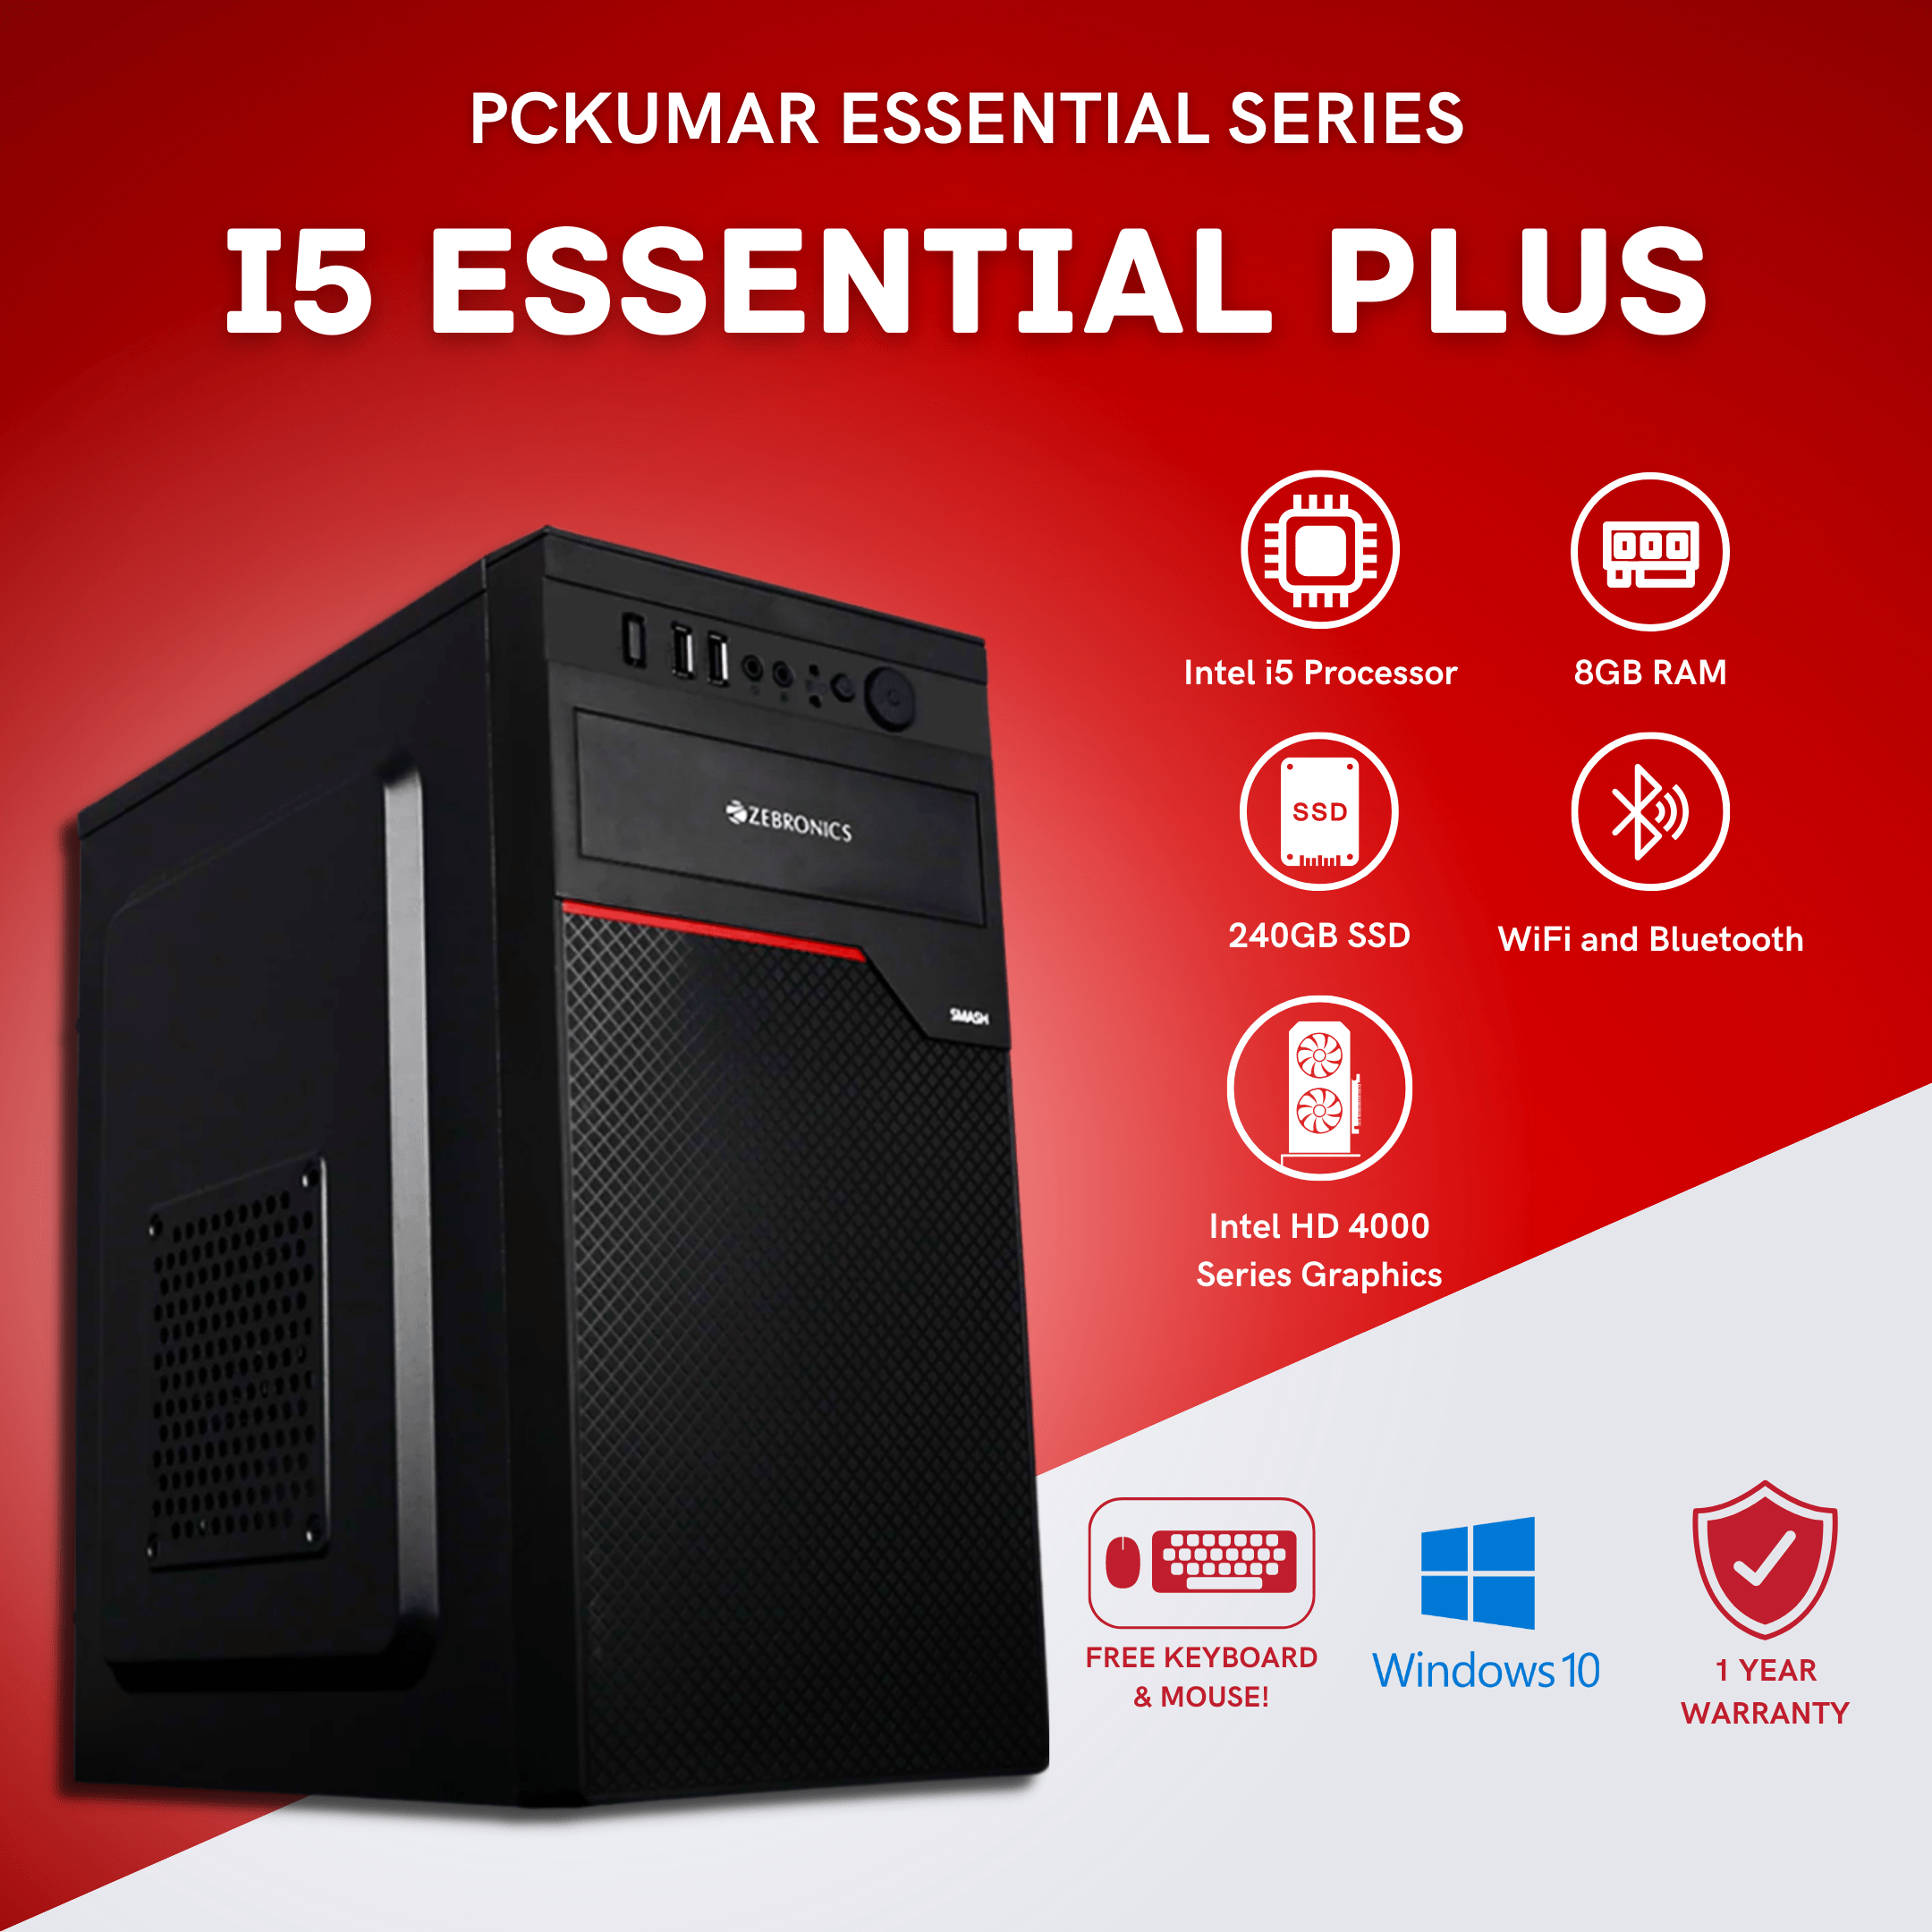 PC Kumar Essential Plus Intel i5 basic PC for Rs 14499